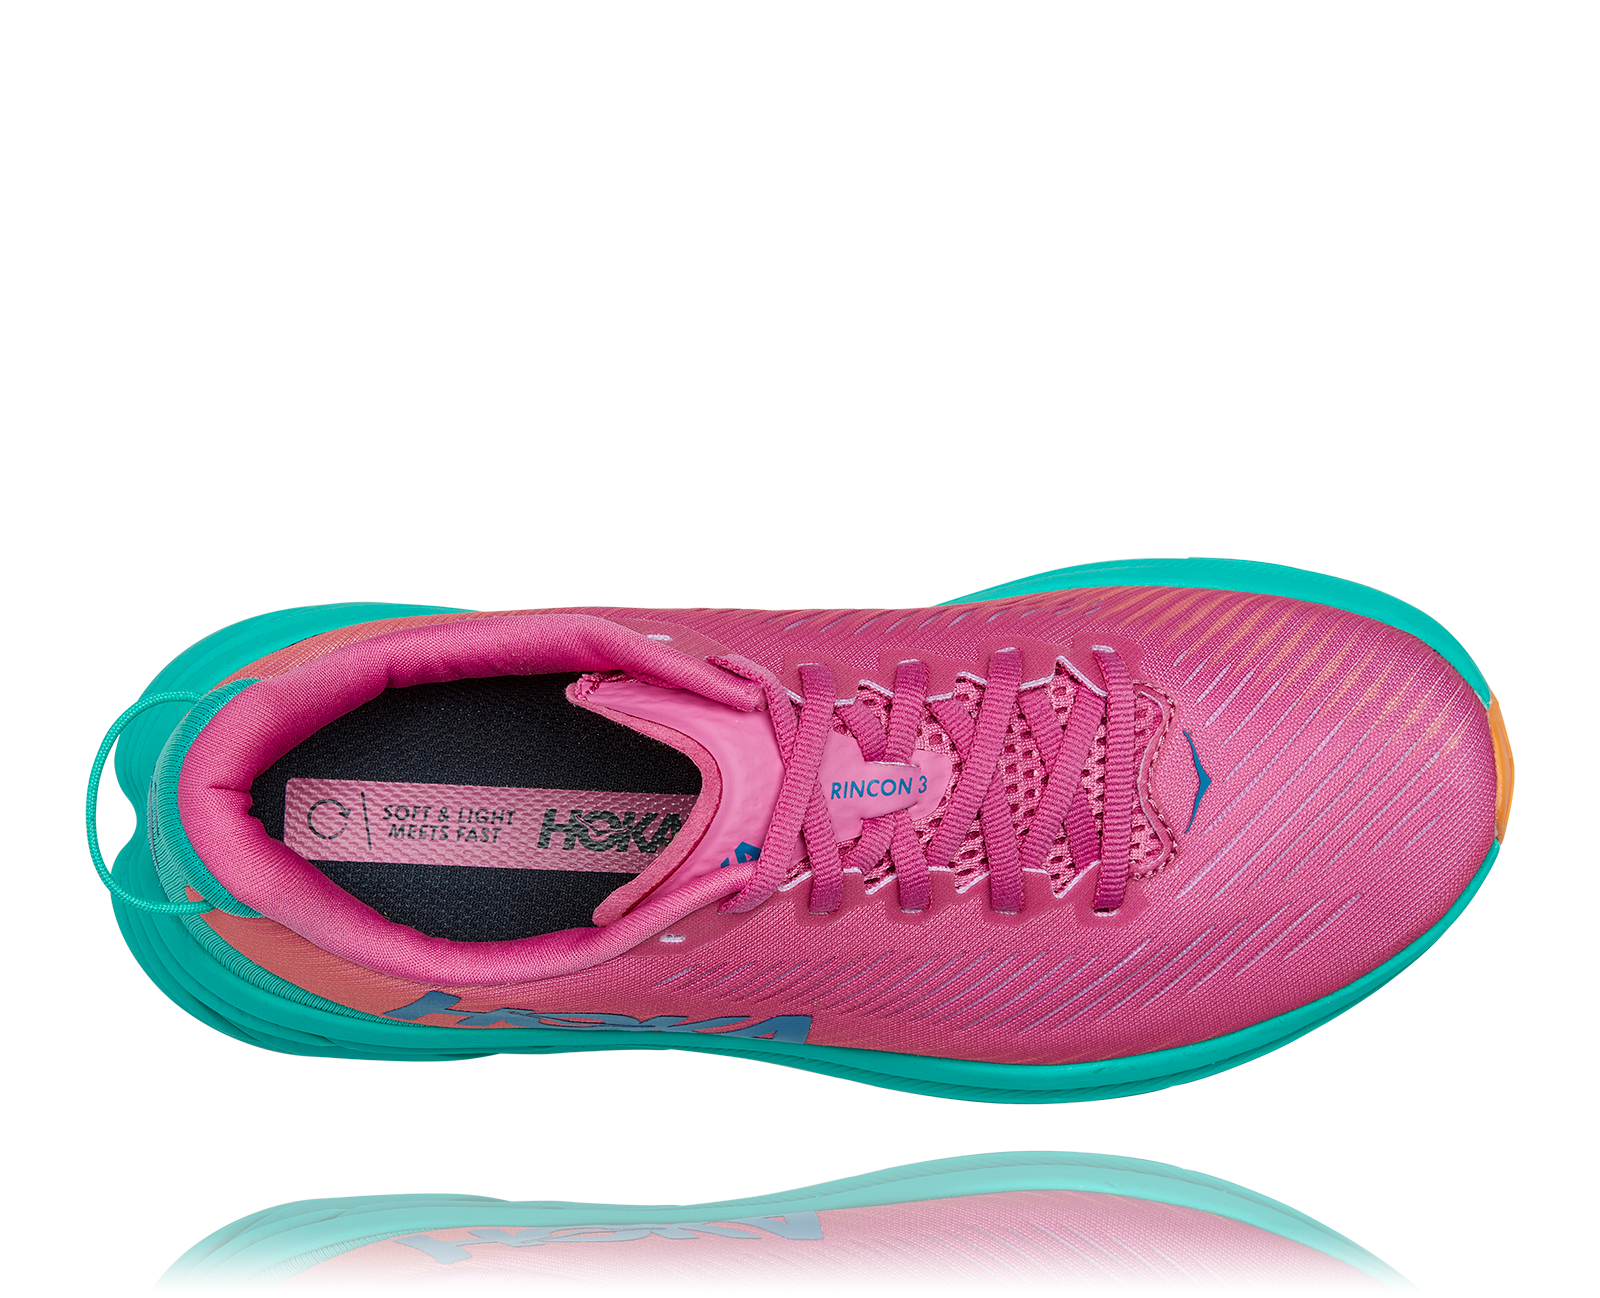 Hoka Womens Rincon 3 road running shoe, pink and blue colour, light weight for racing shoe, maximum cushioning, neutral shoe